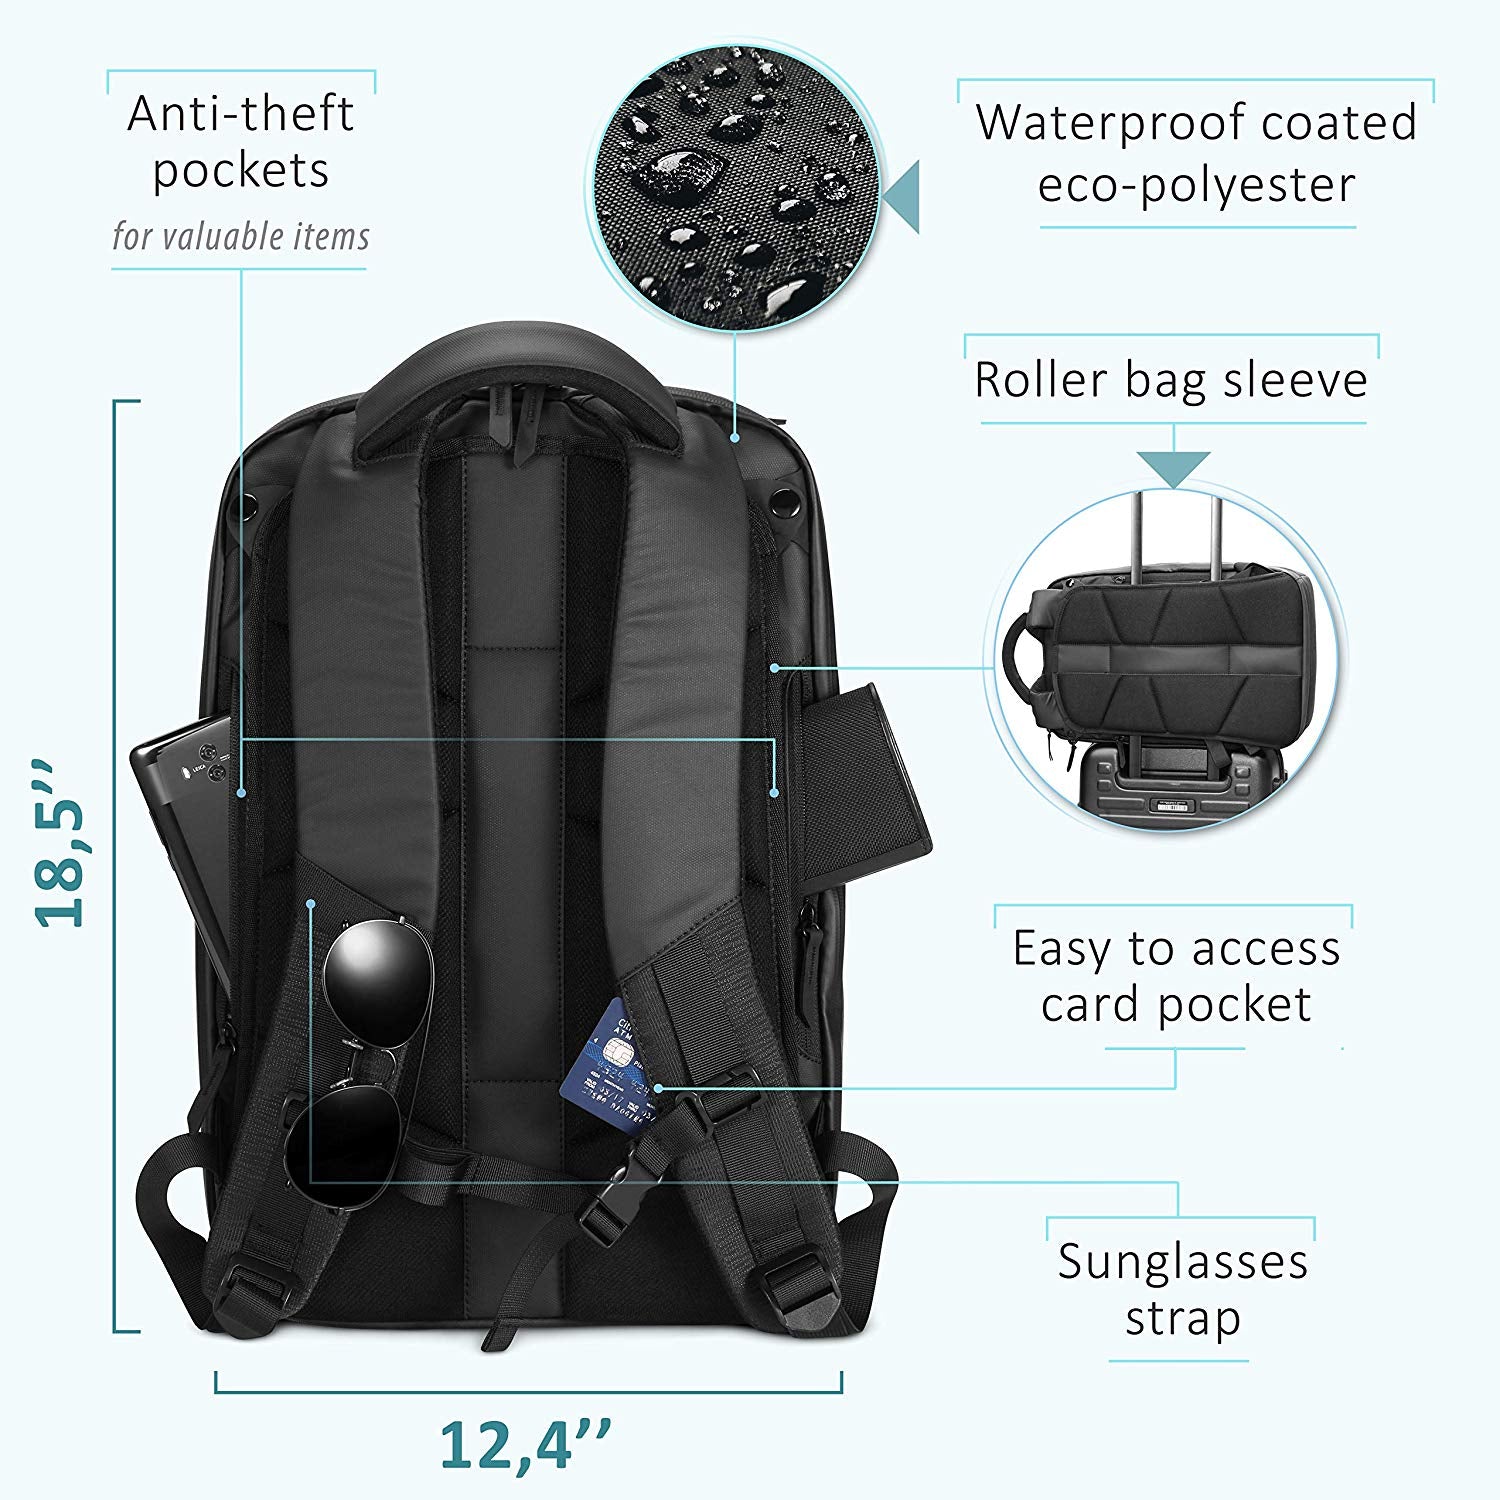 30l backpack